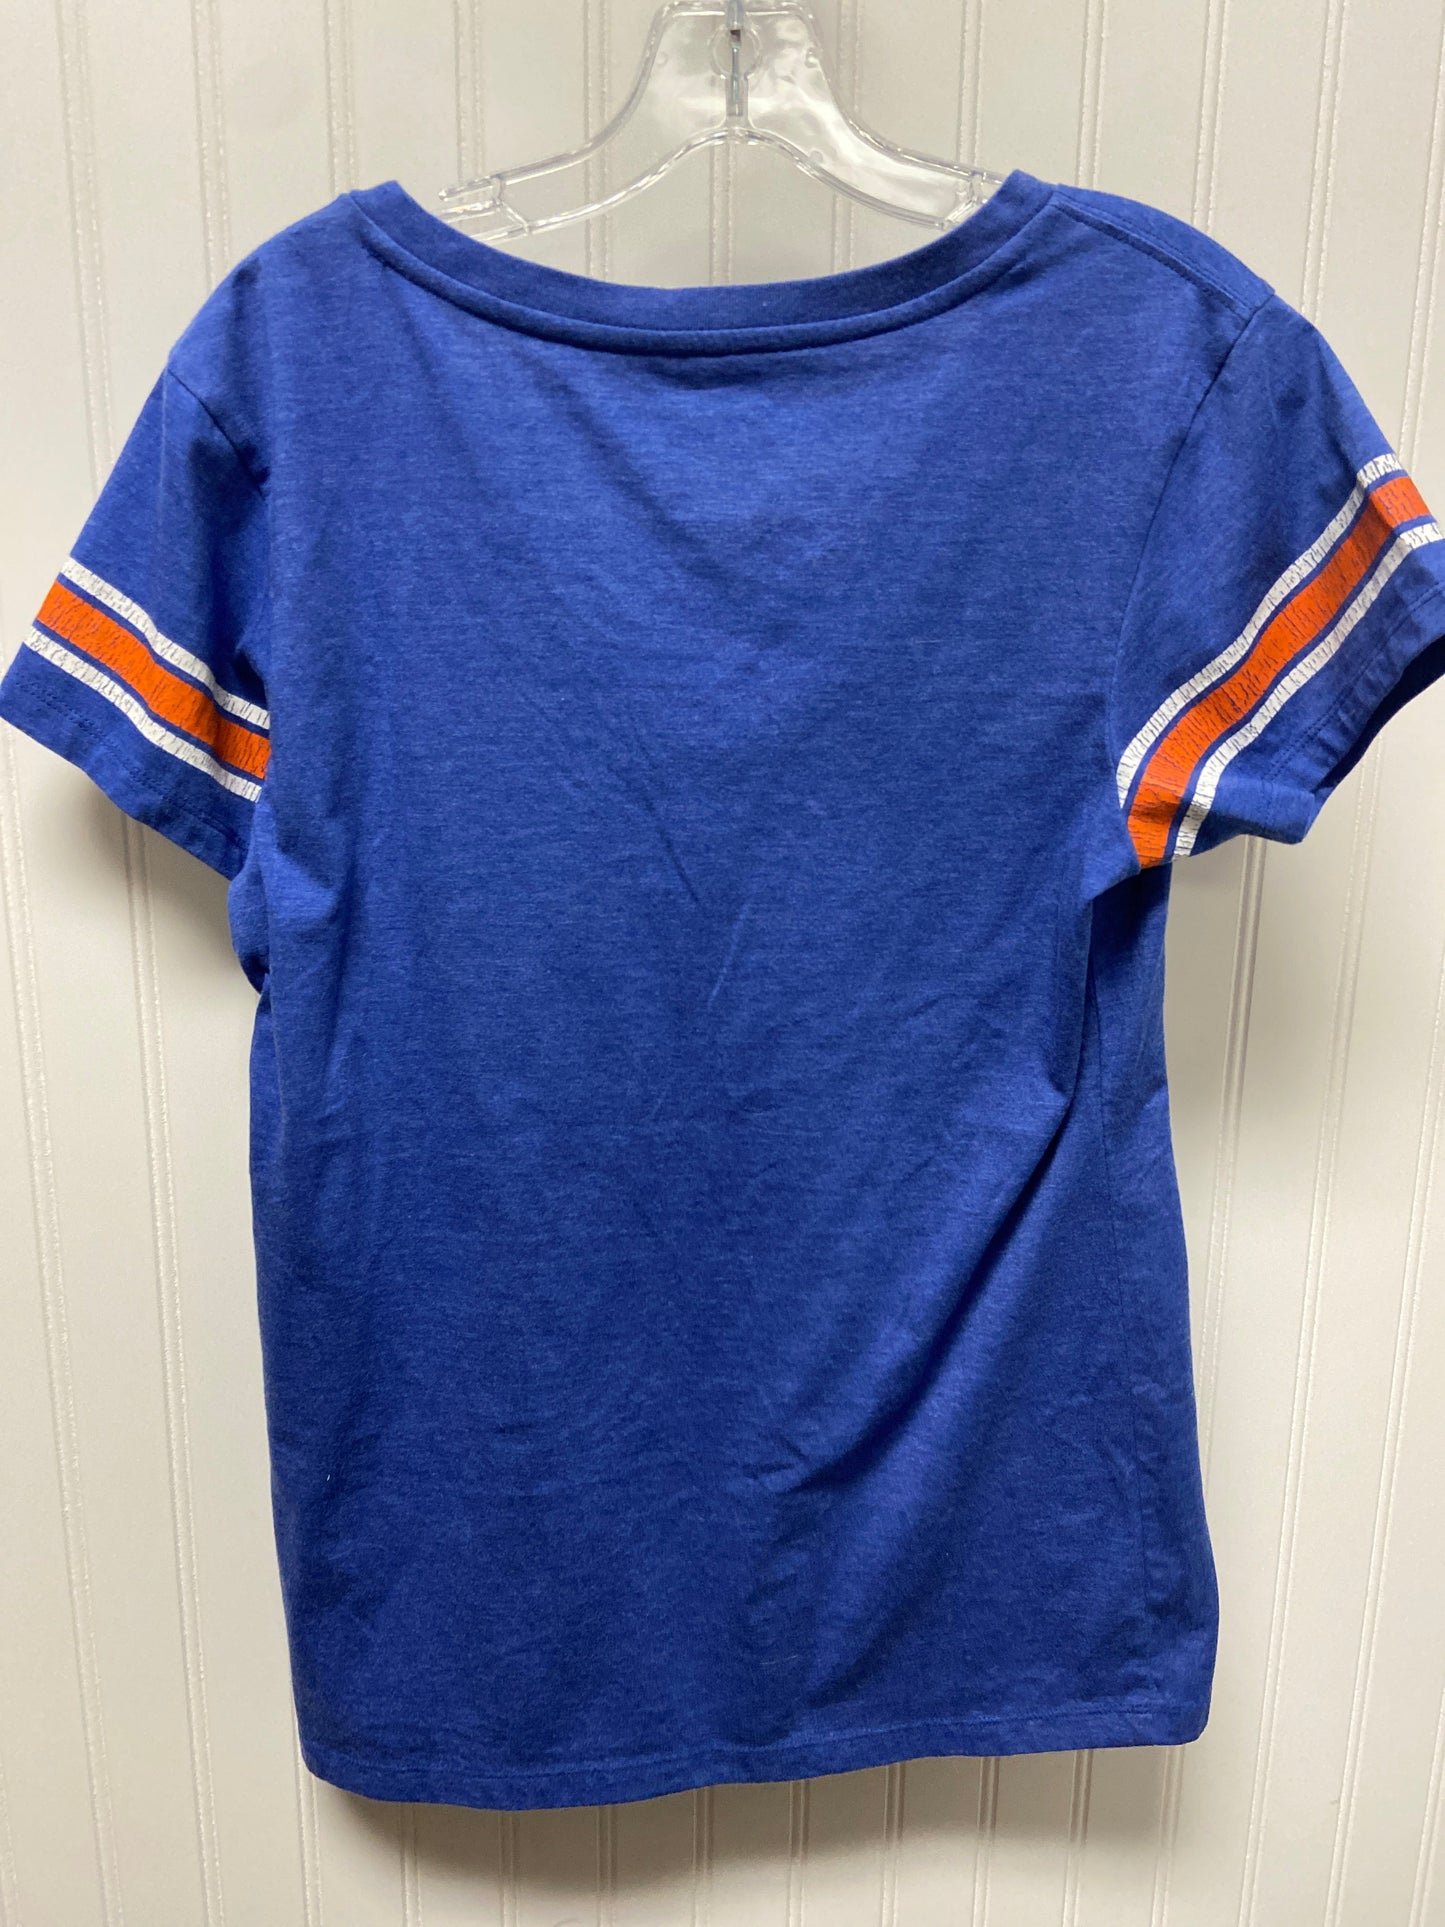 Blue & Orange Overalls Clothes Mentor, Size Xl